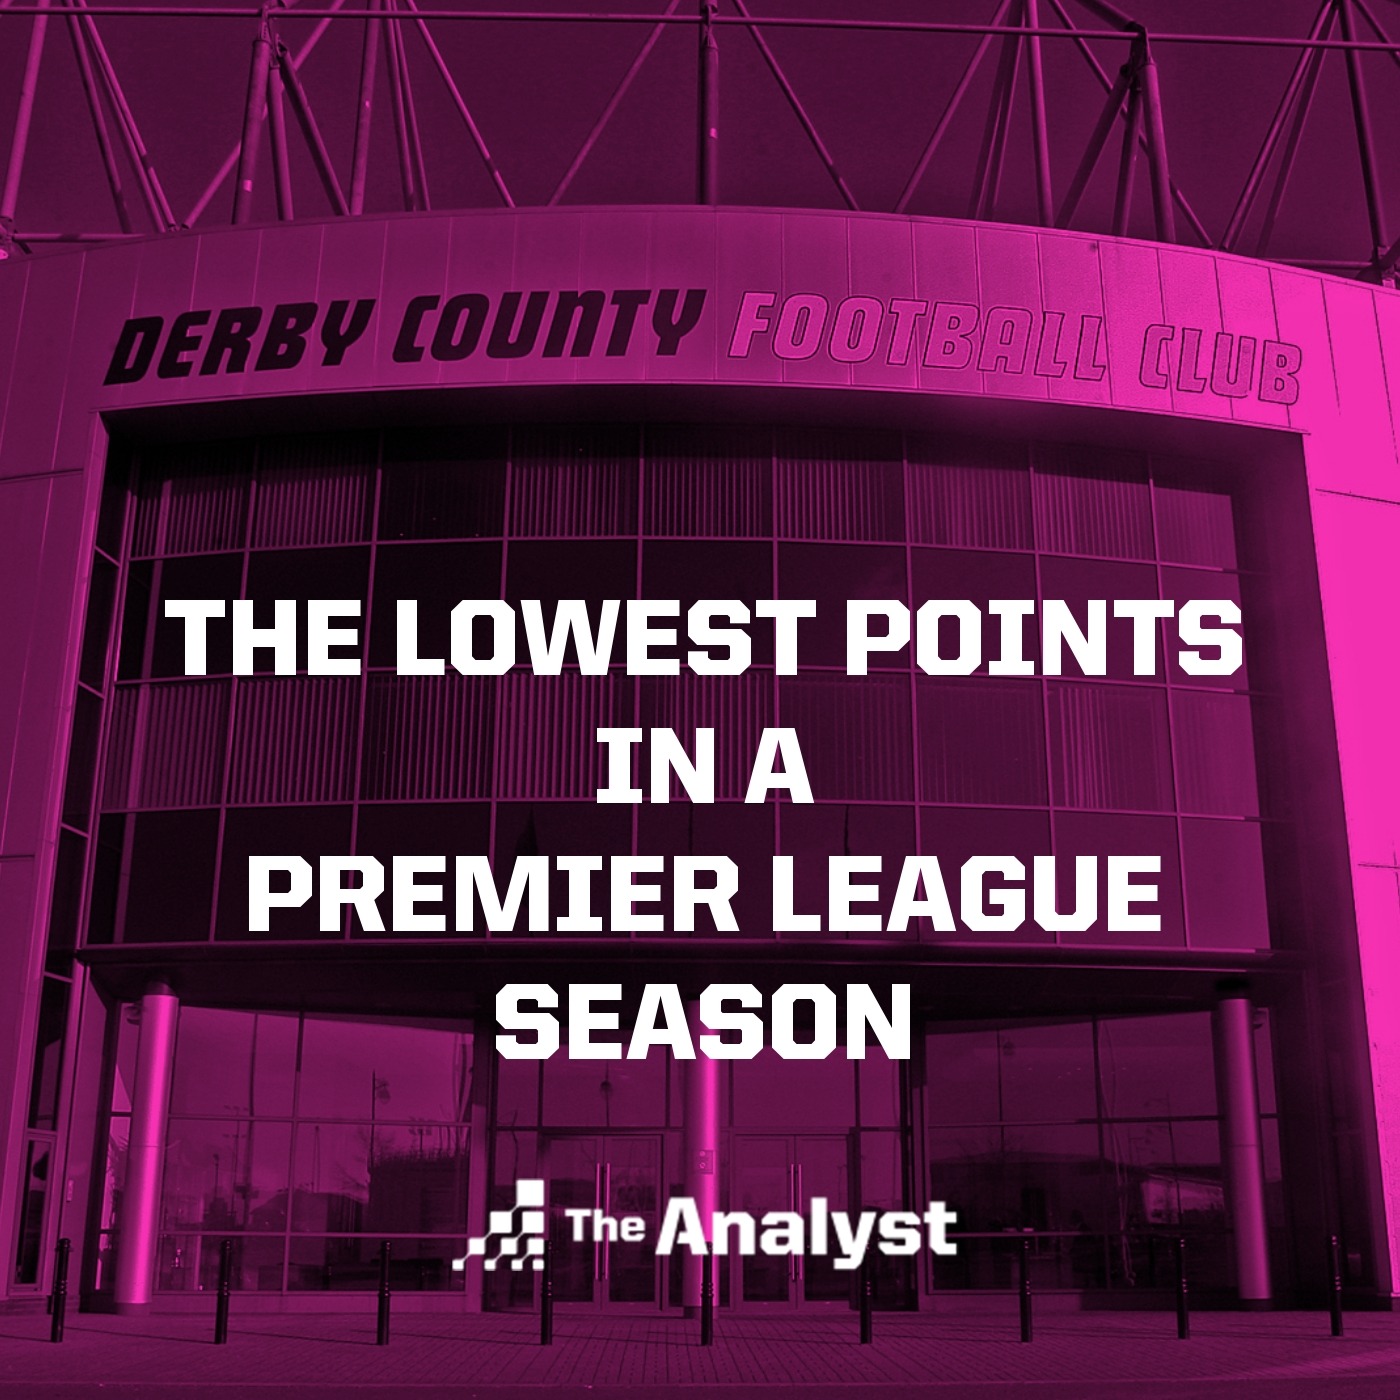 The Lowest Points in a Premier League Season